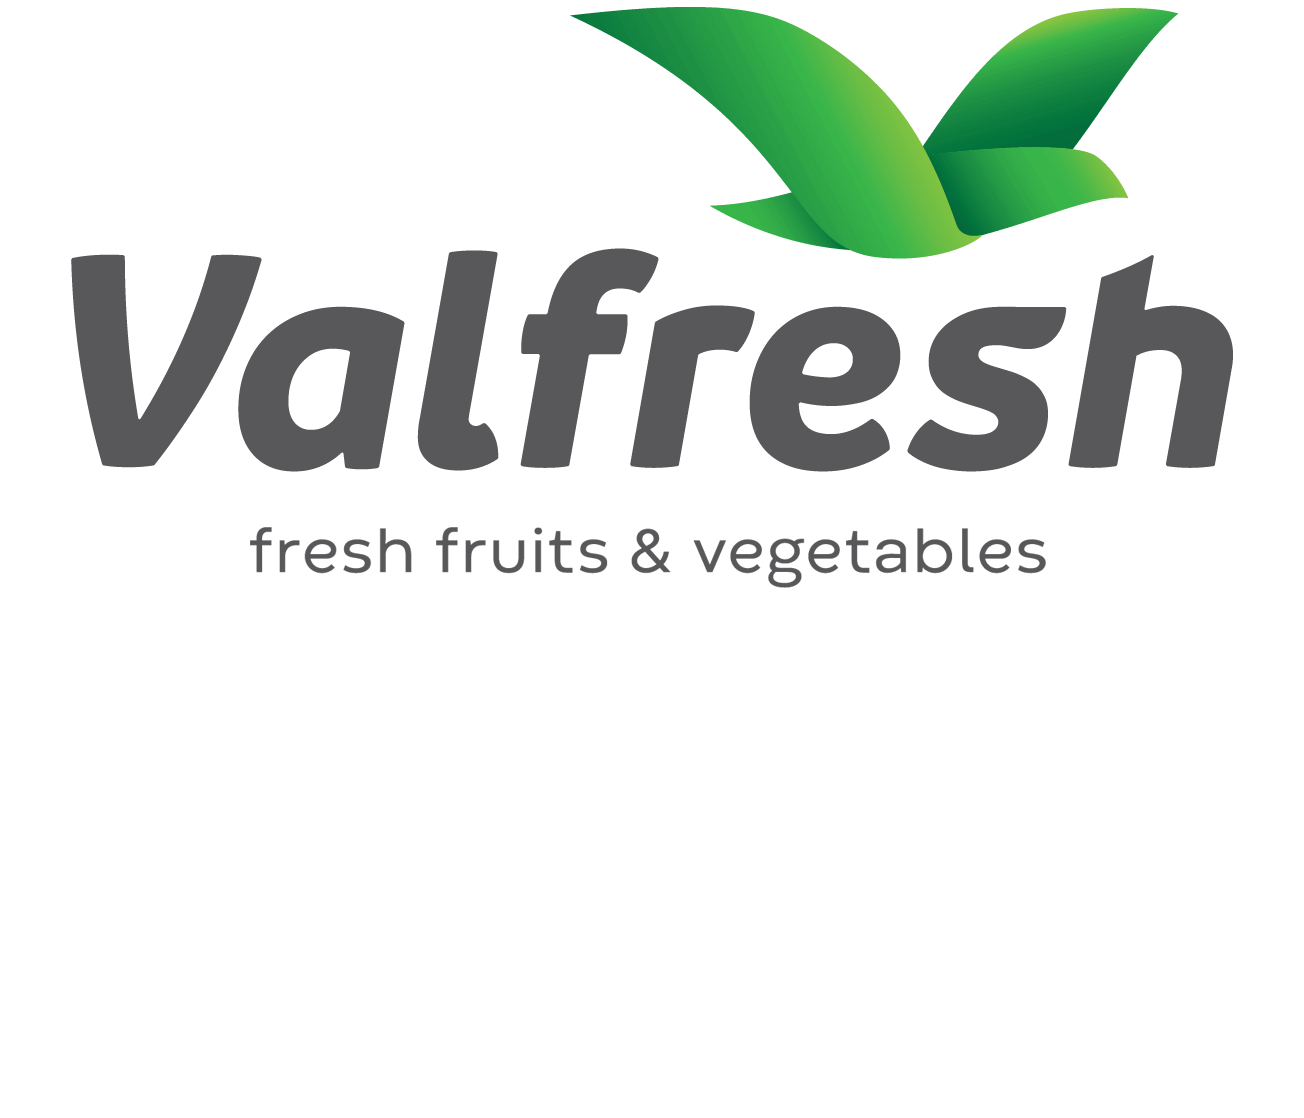 Logotipo Valfresh - fresh fruits & vegetables logo